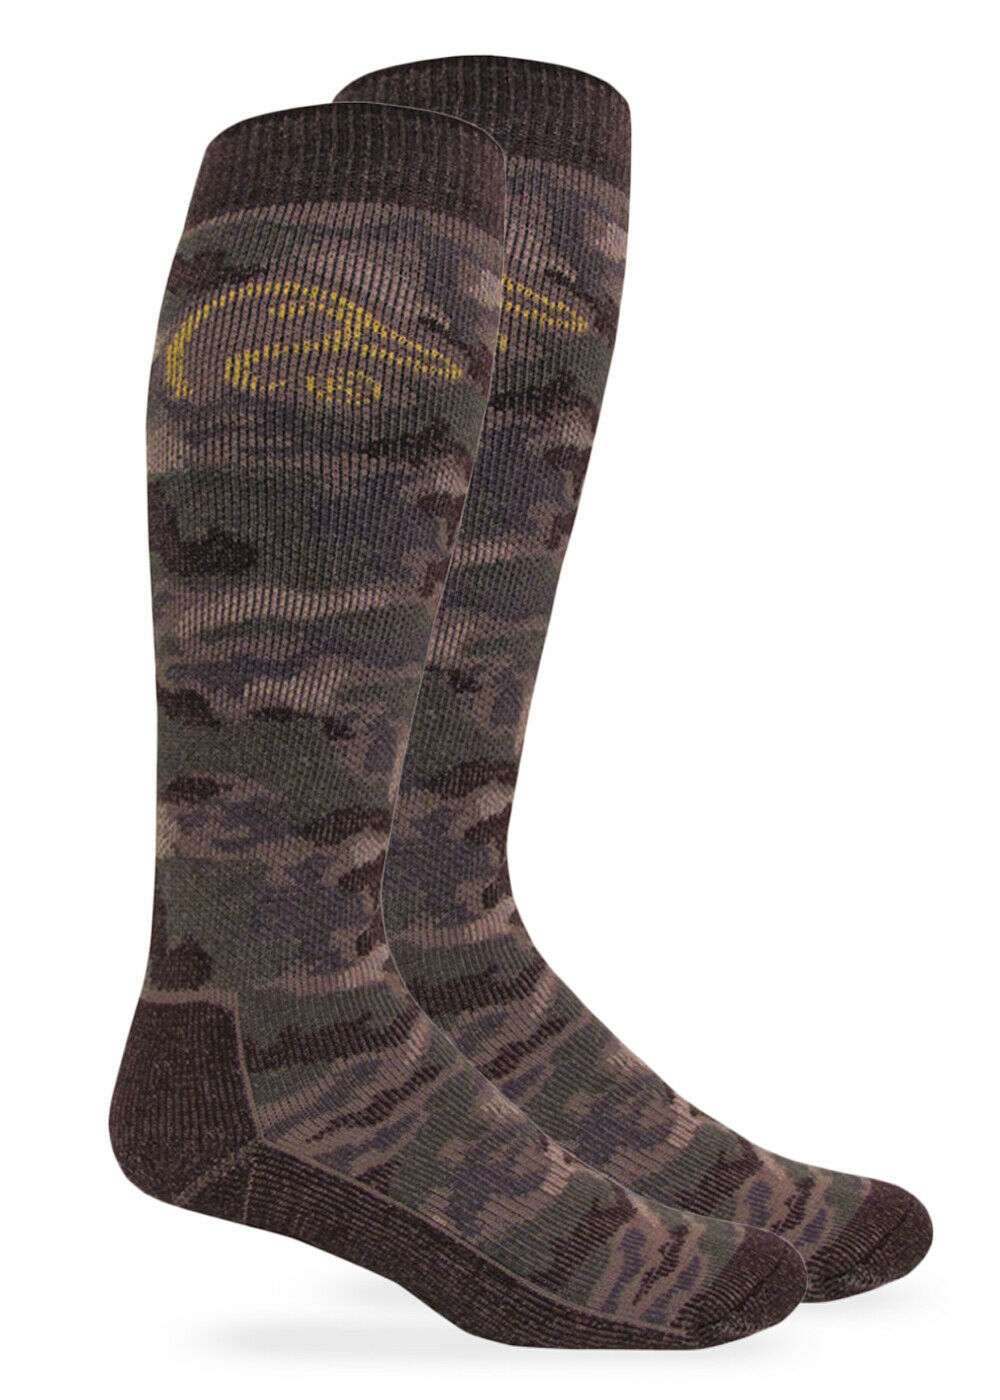 Ducks Unlimited/boots - Ducks unlimited mens camo 40% merino wool heavyweight tall long boot socks